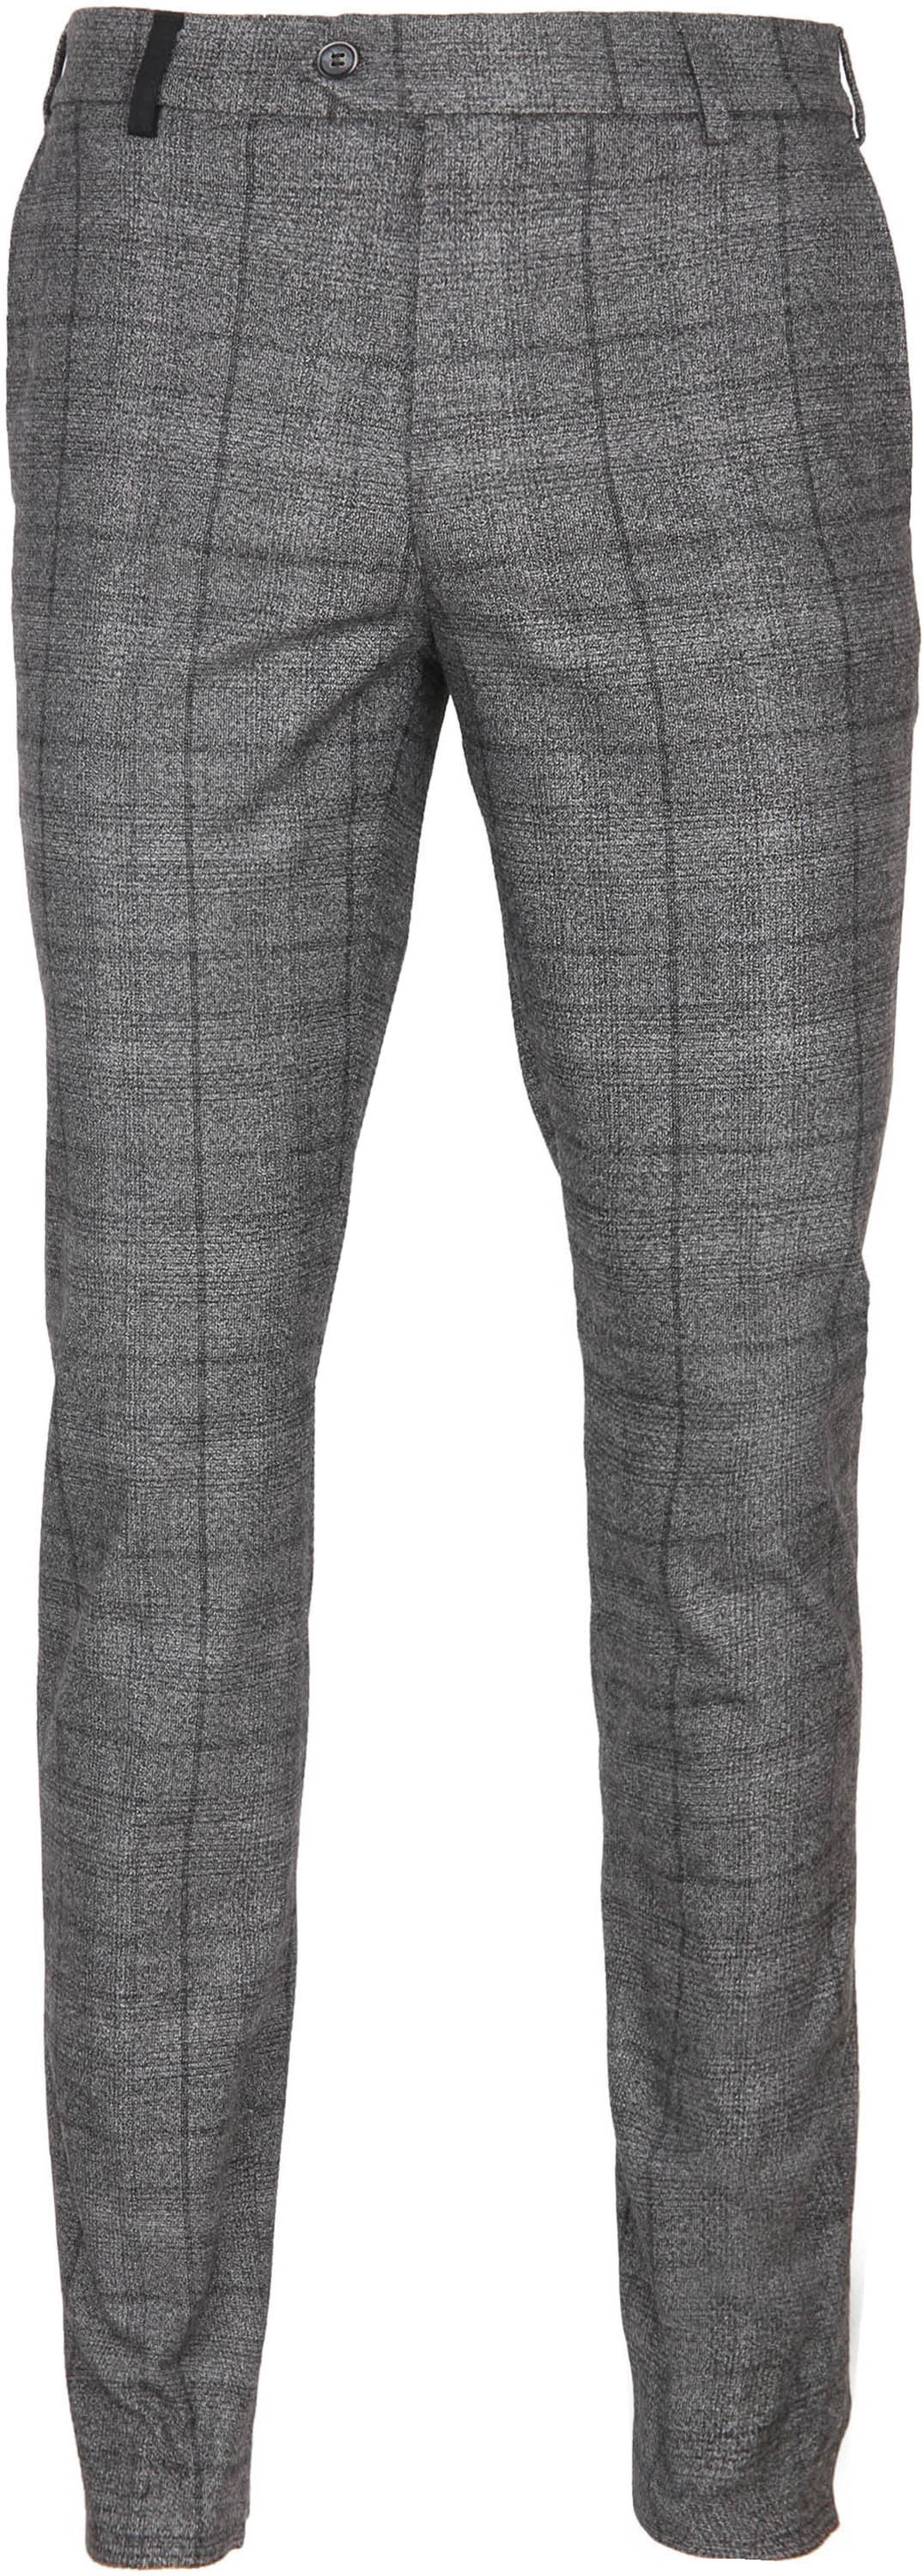 Suitable Pantalon Milano Pane Grey size W 30/31